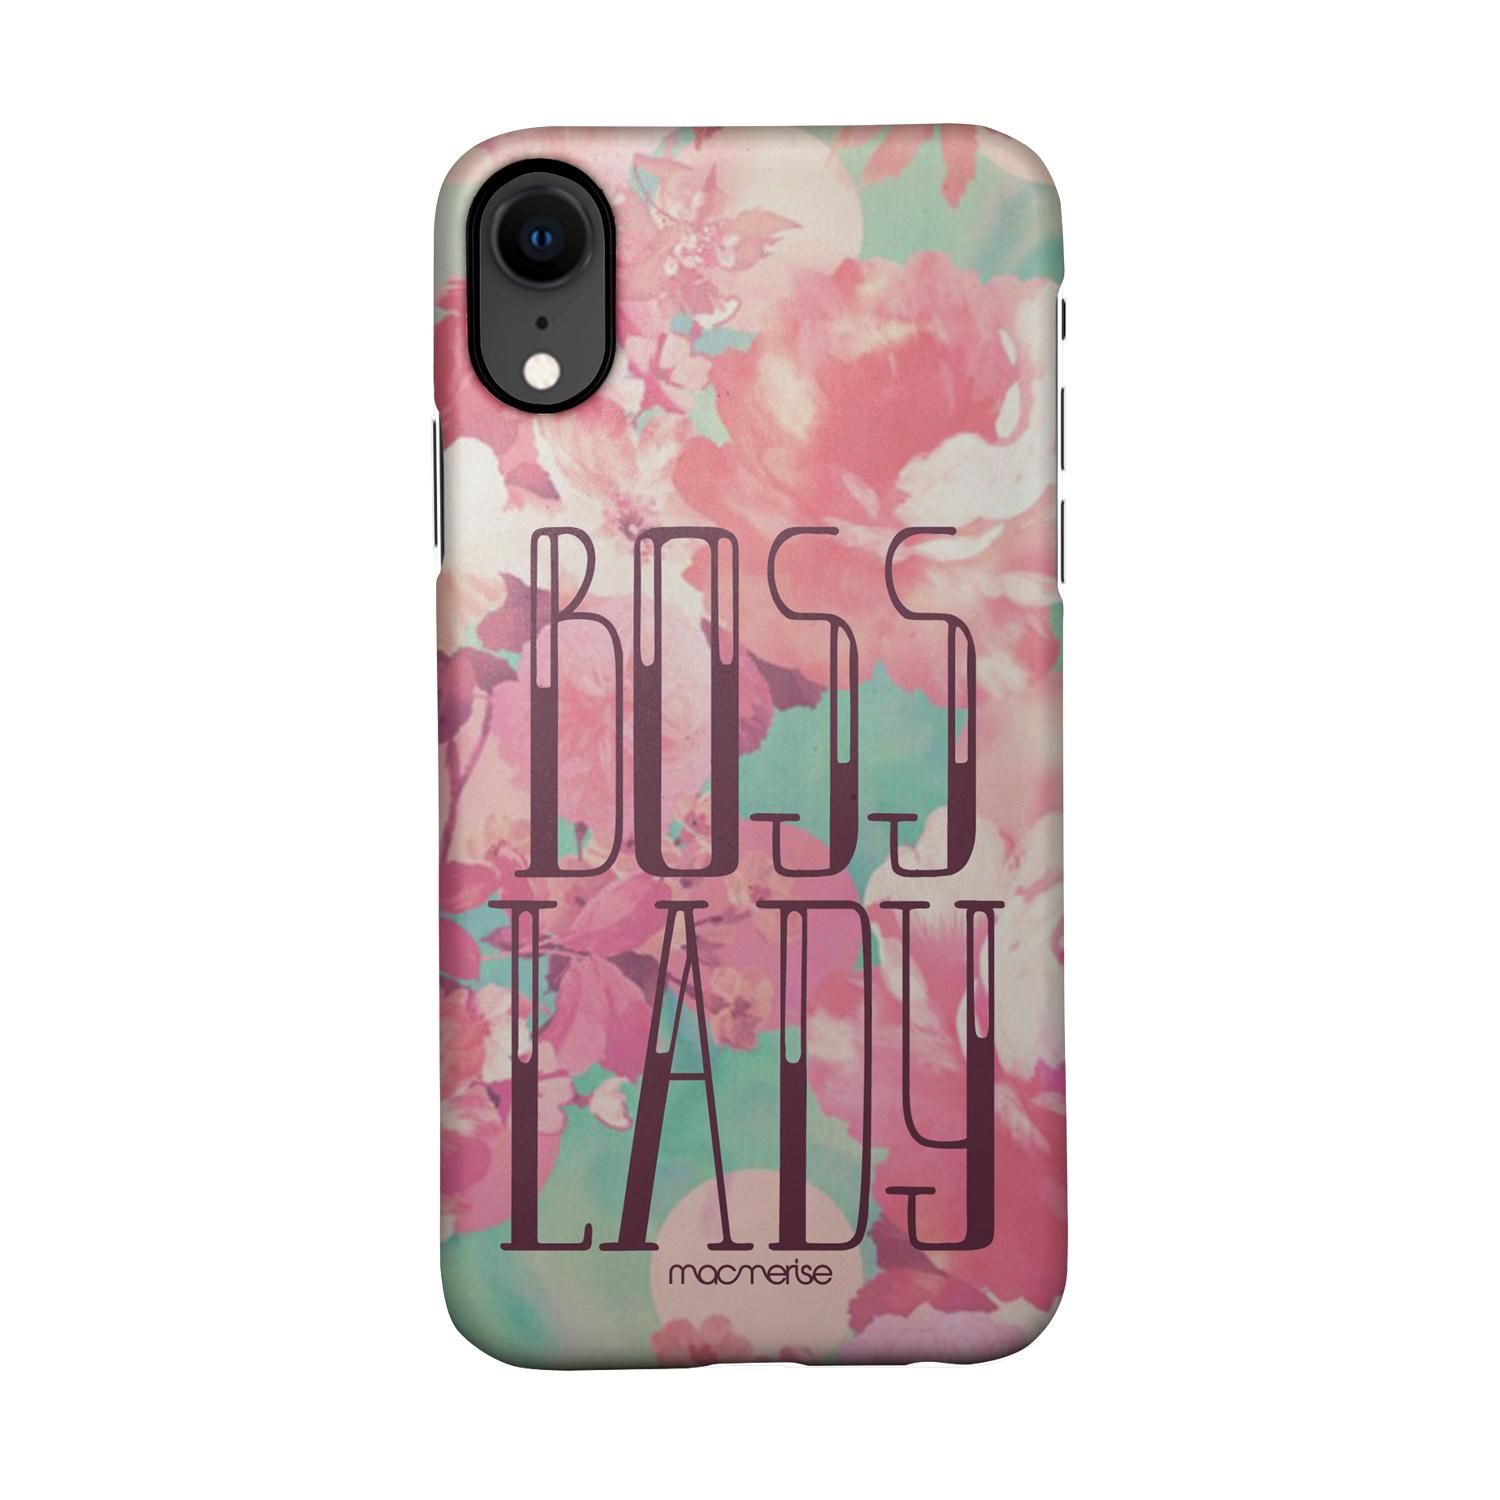 Buy Boss Lady - Sleek Phone Case for iPhone XR Online